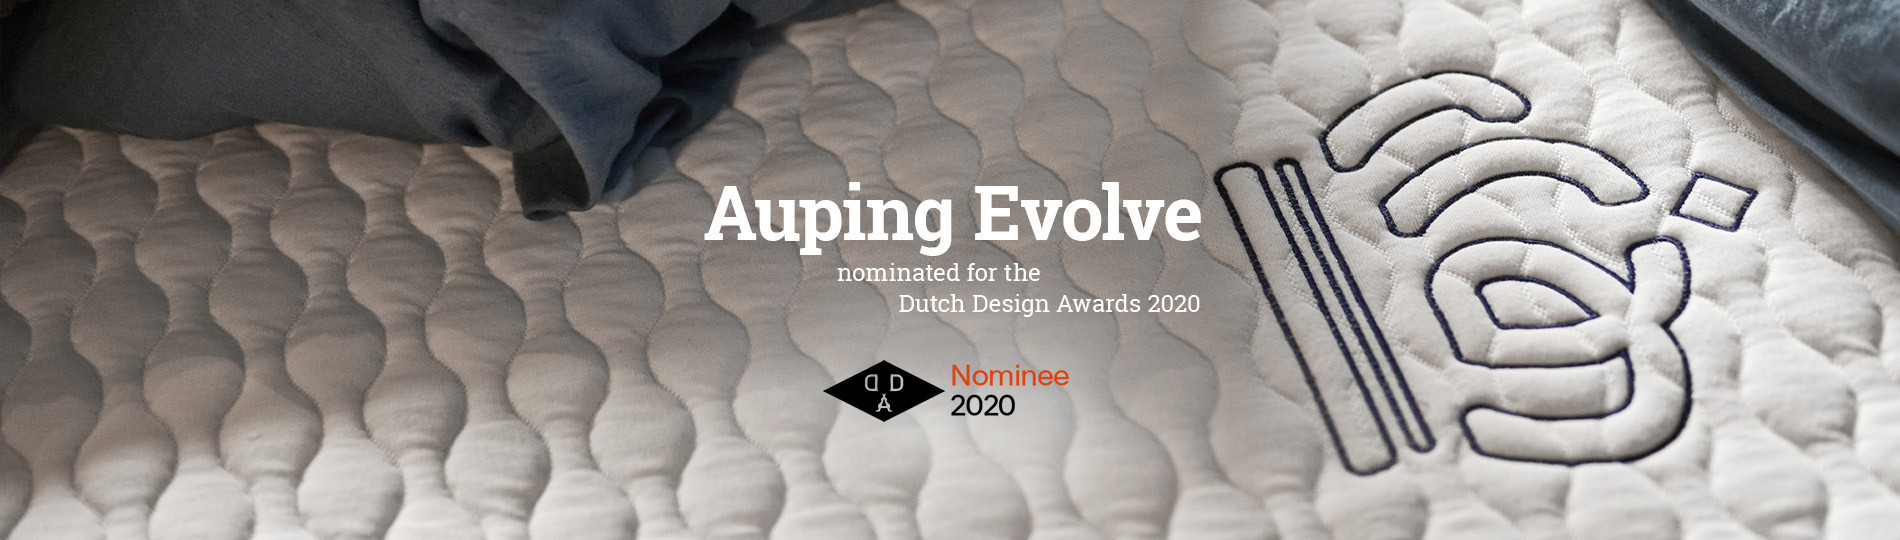 Auping Evolve nominated dutch design awards 2020